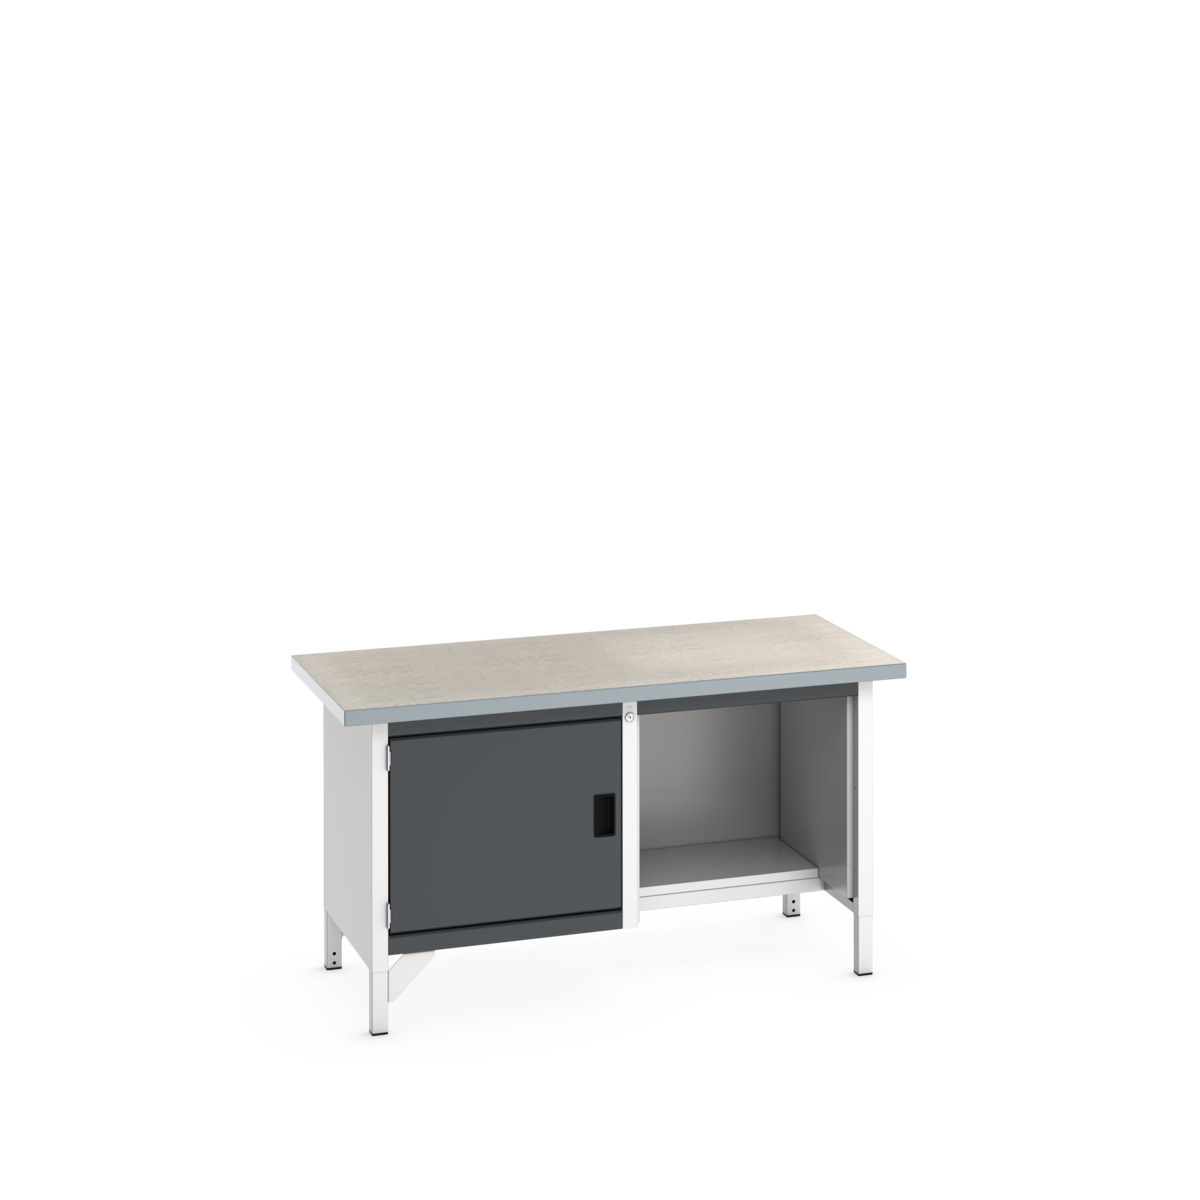 41002036. - cubio storage bench (lino)